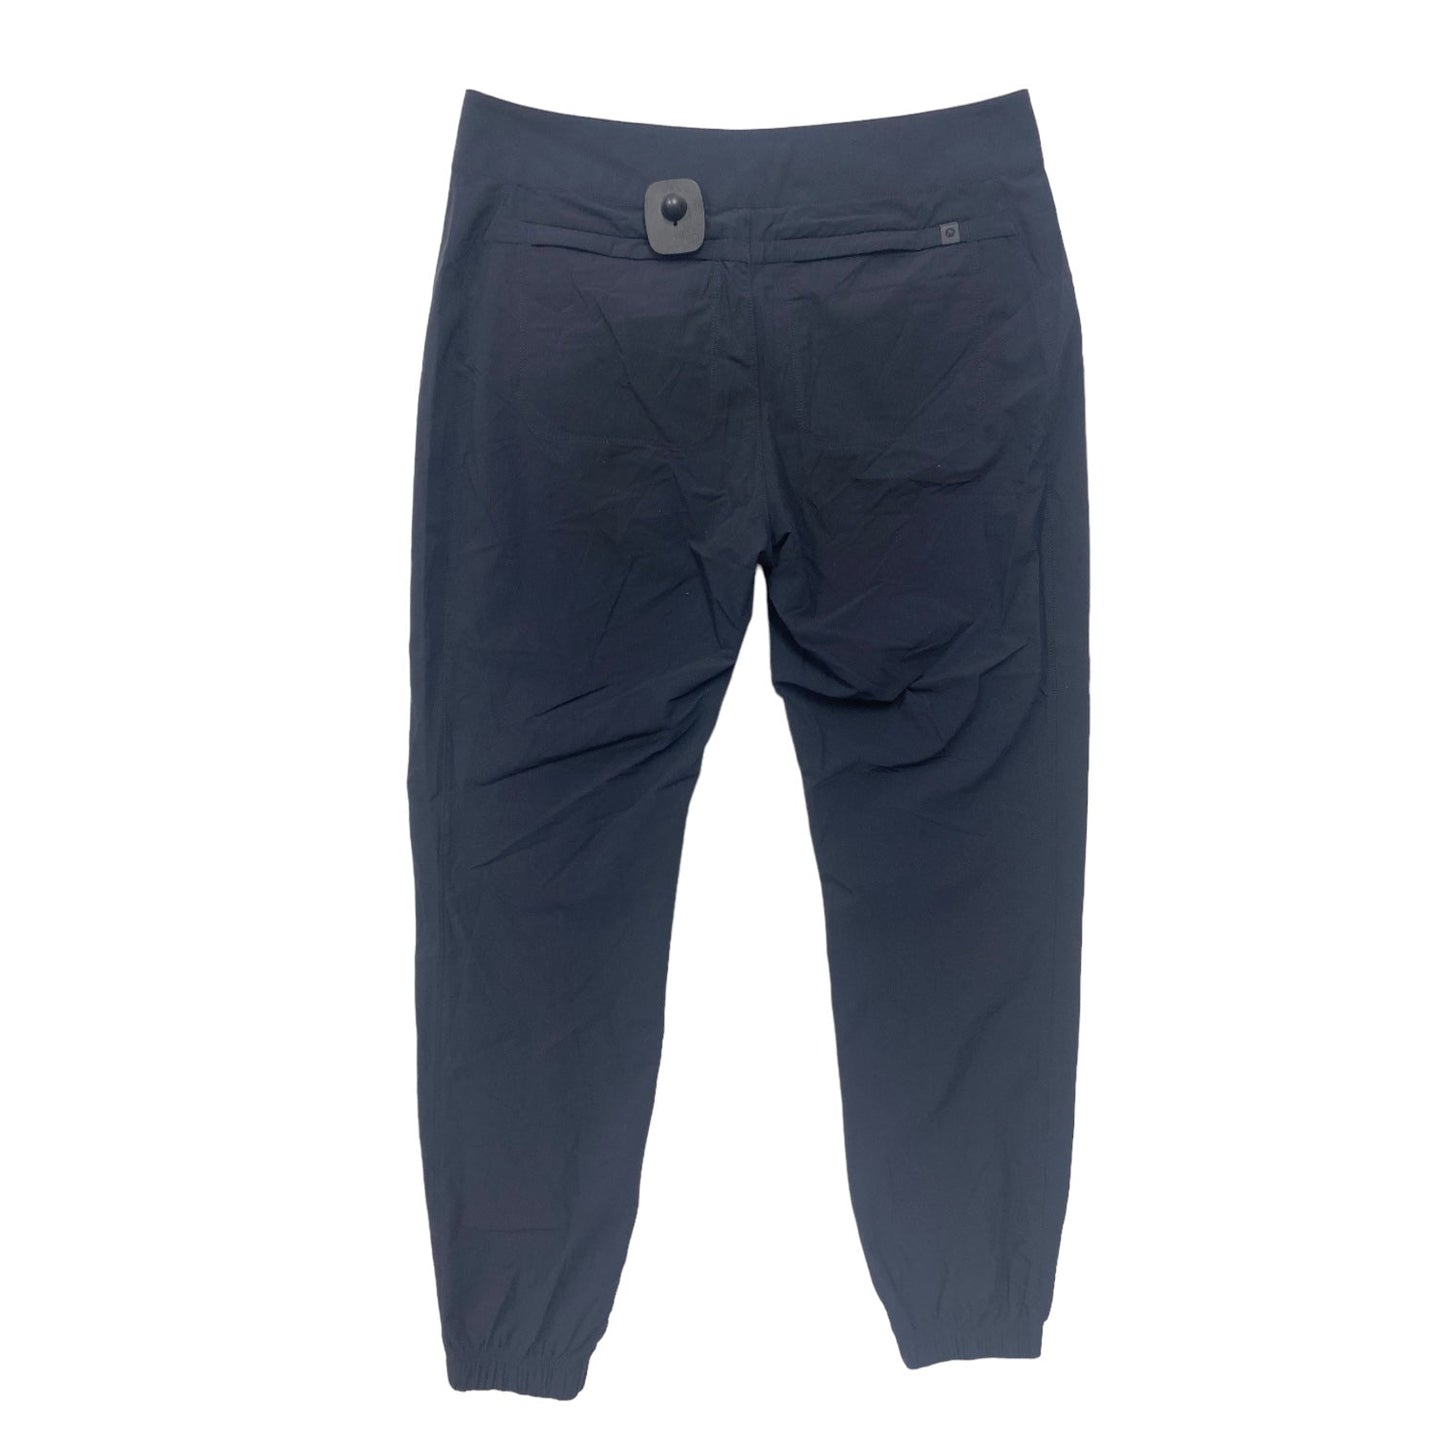 Grey Athletic Pants Marmot, Size 8